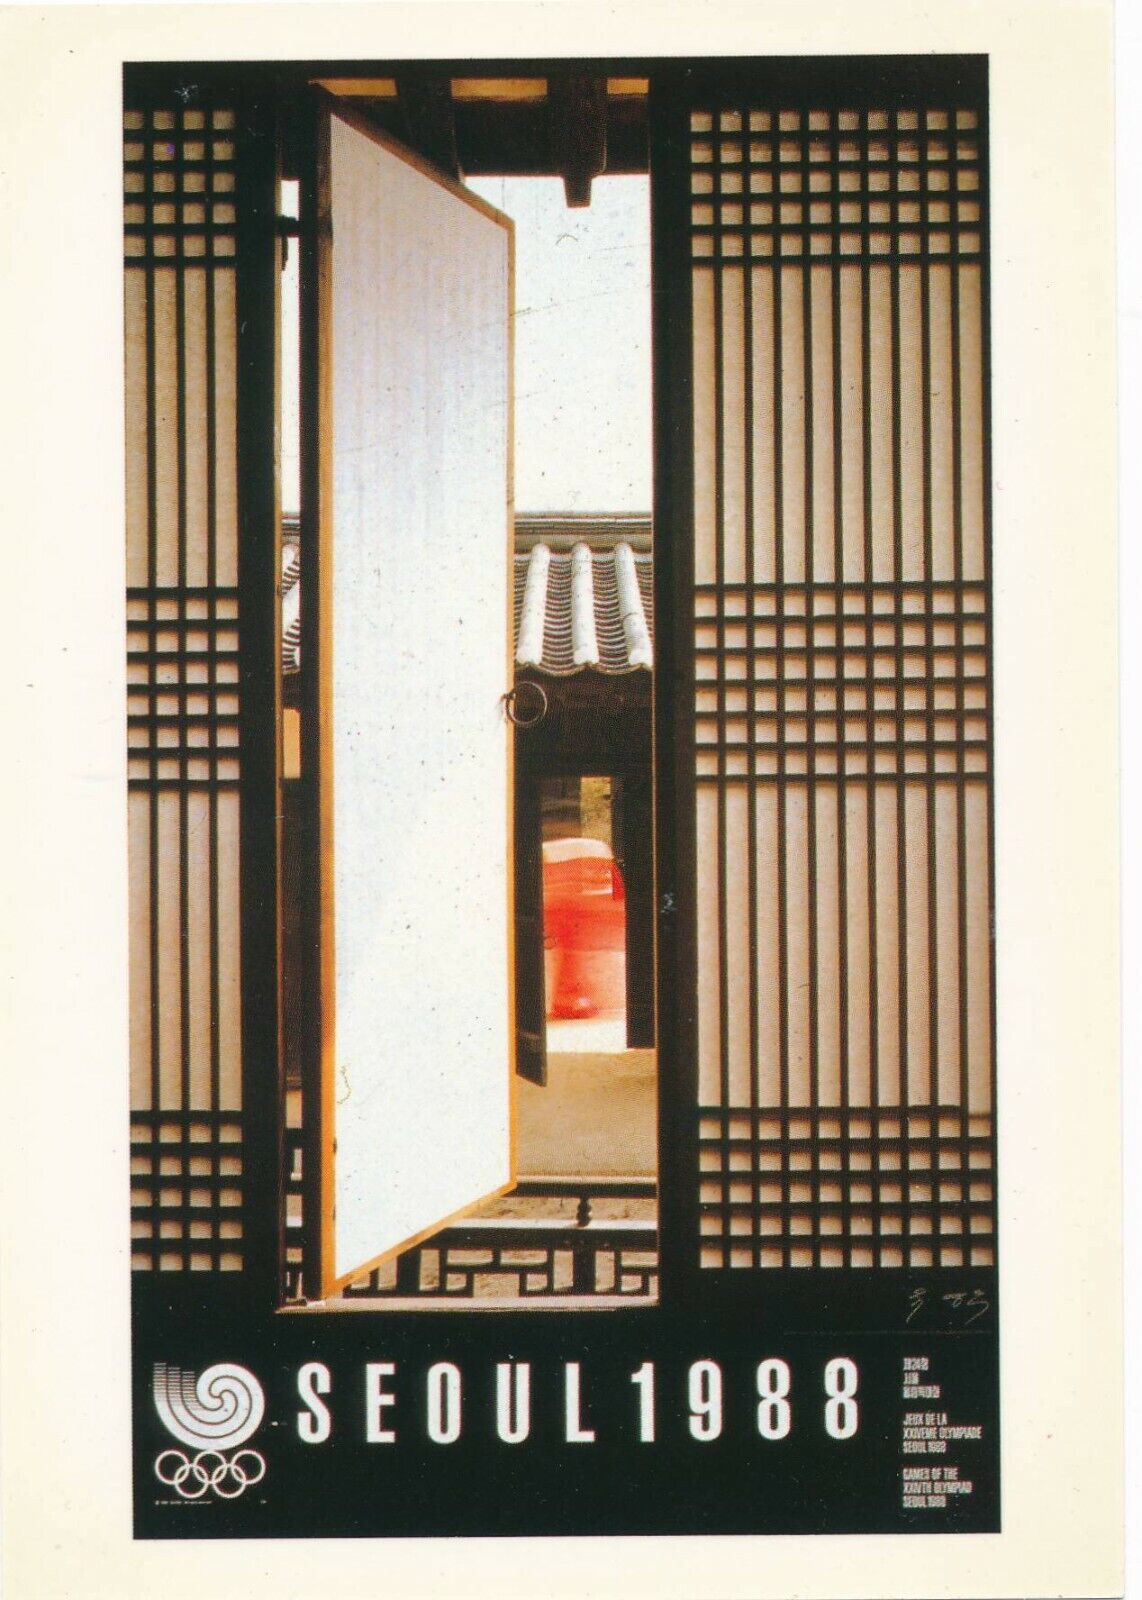 1988 Olympic Games Seoul, original postcard.